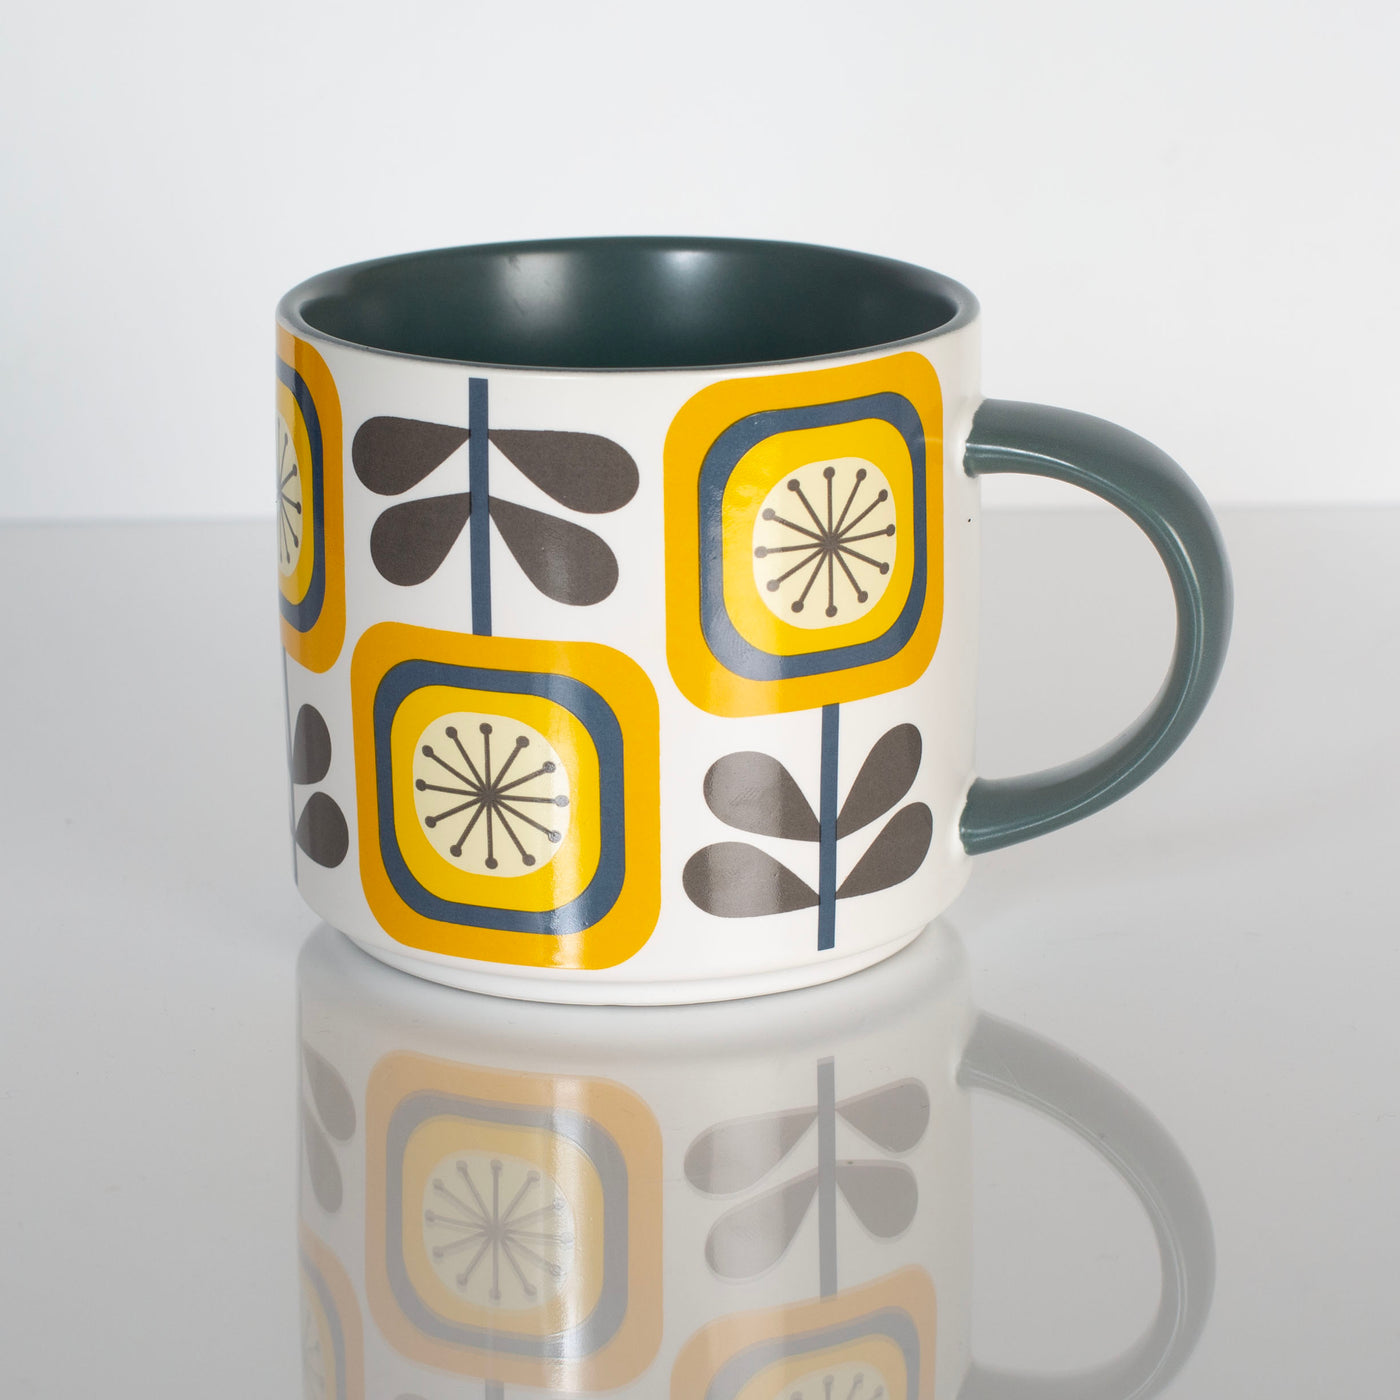 15oz mid century modern yellow sunflower stackable ceramic mug. Matte finish coffee mug